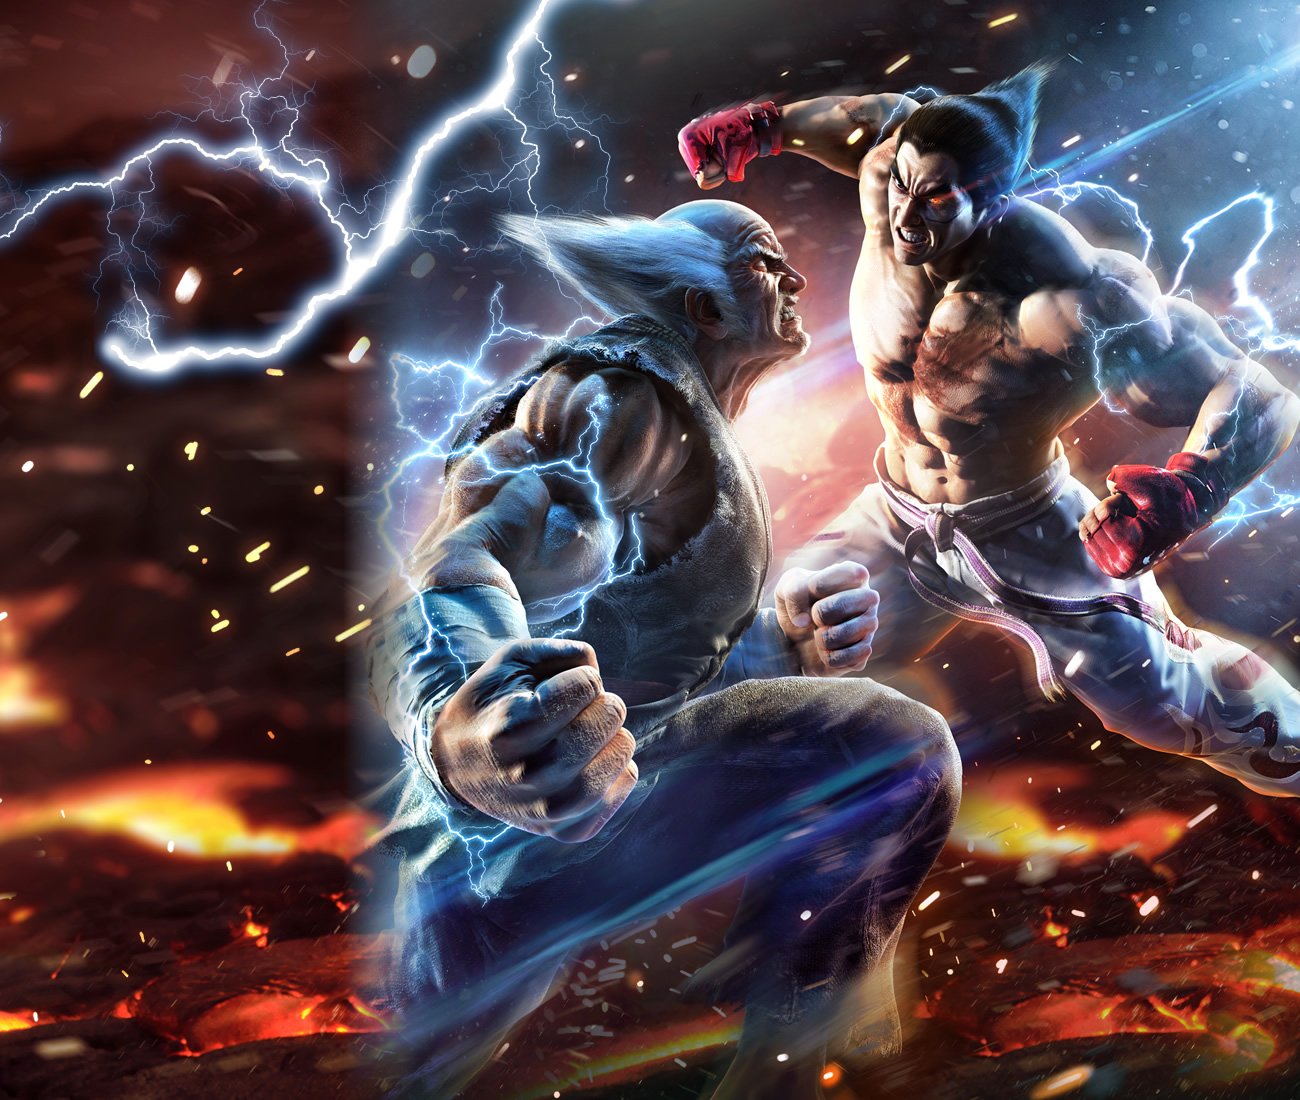 Tekken 7 Wallpapers High Quality | Download Free